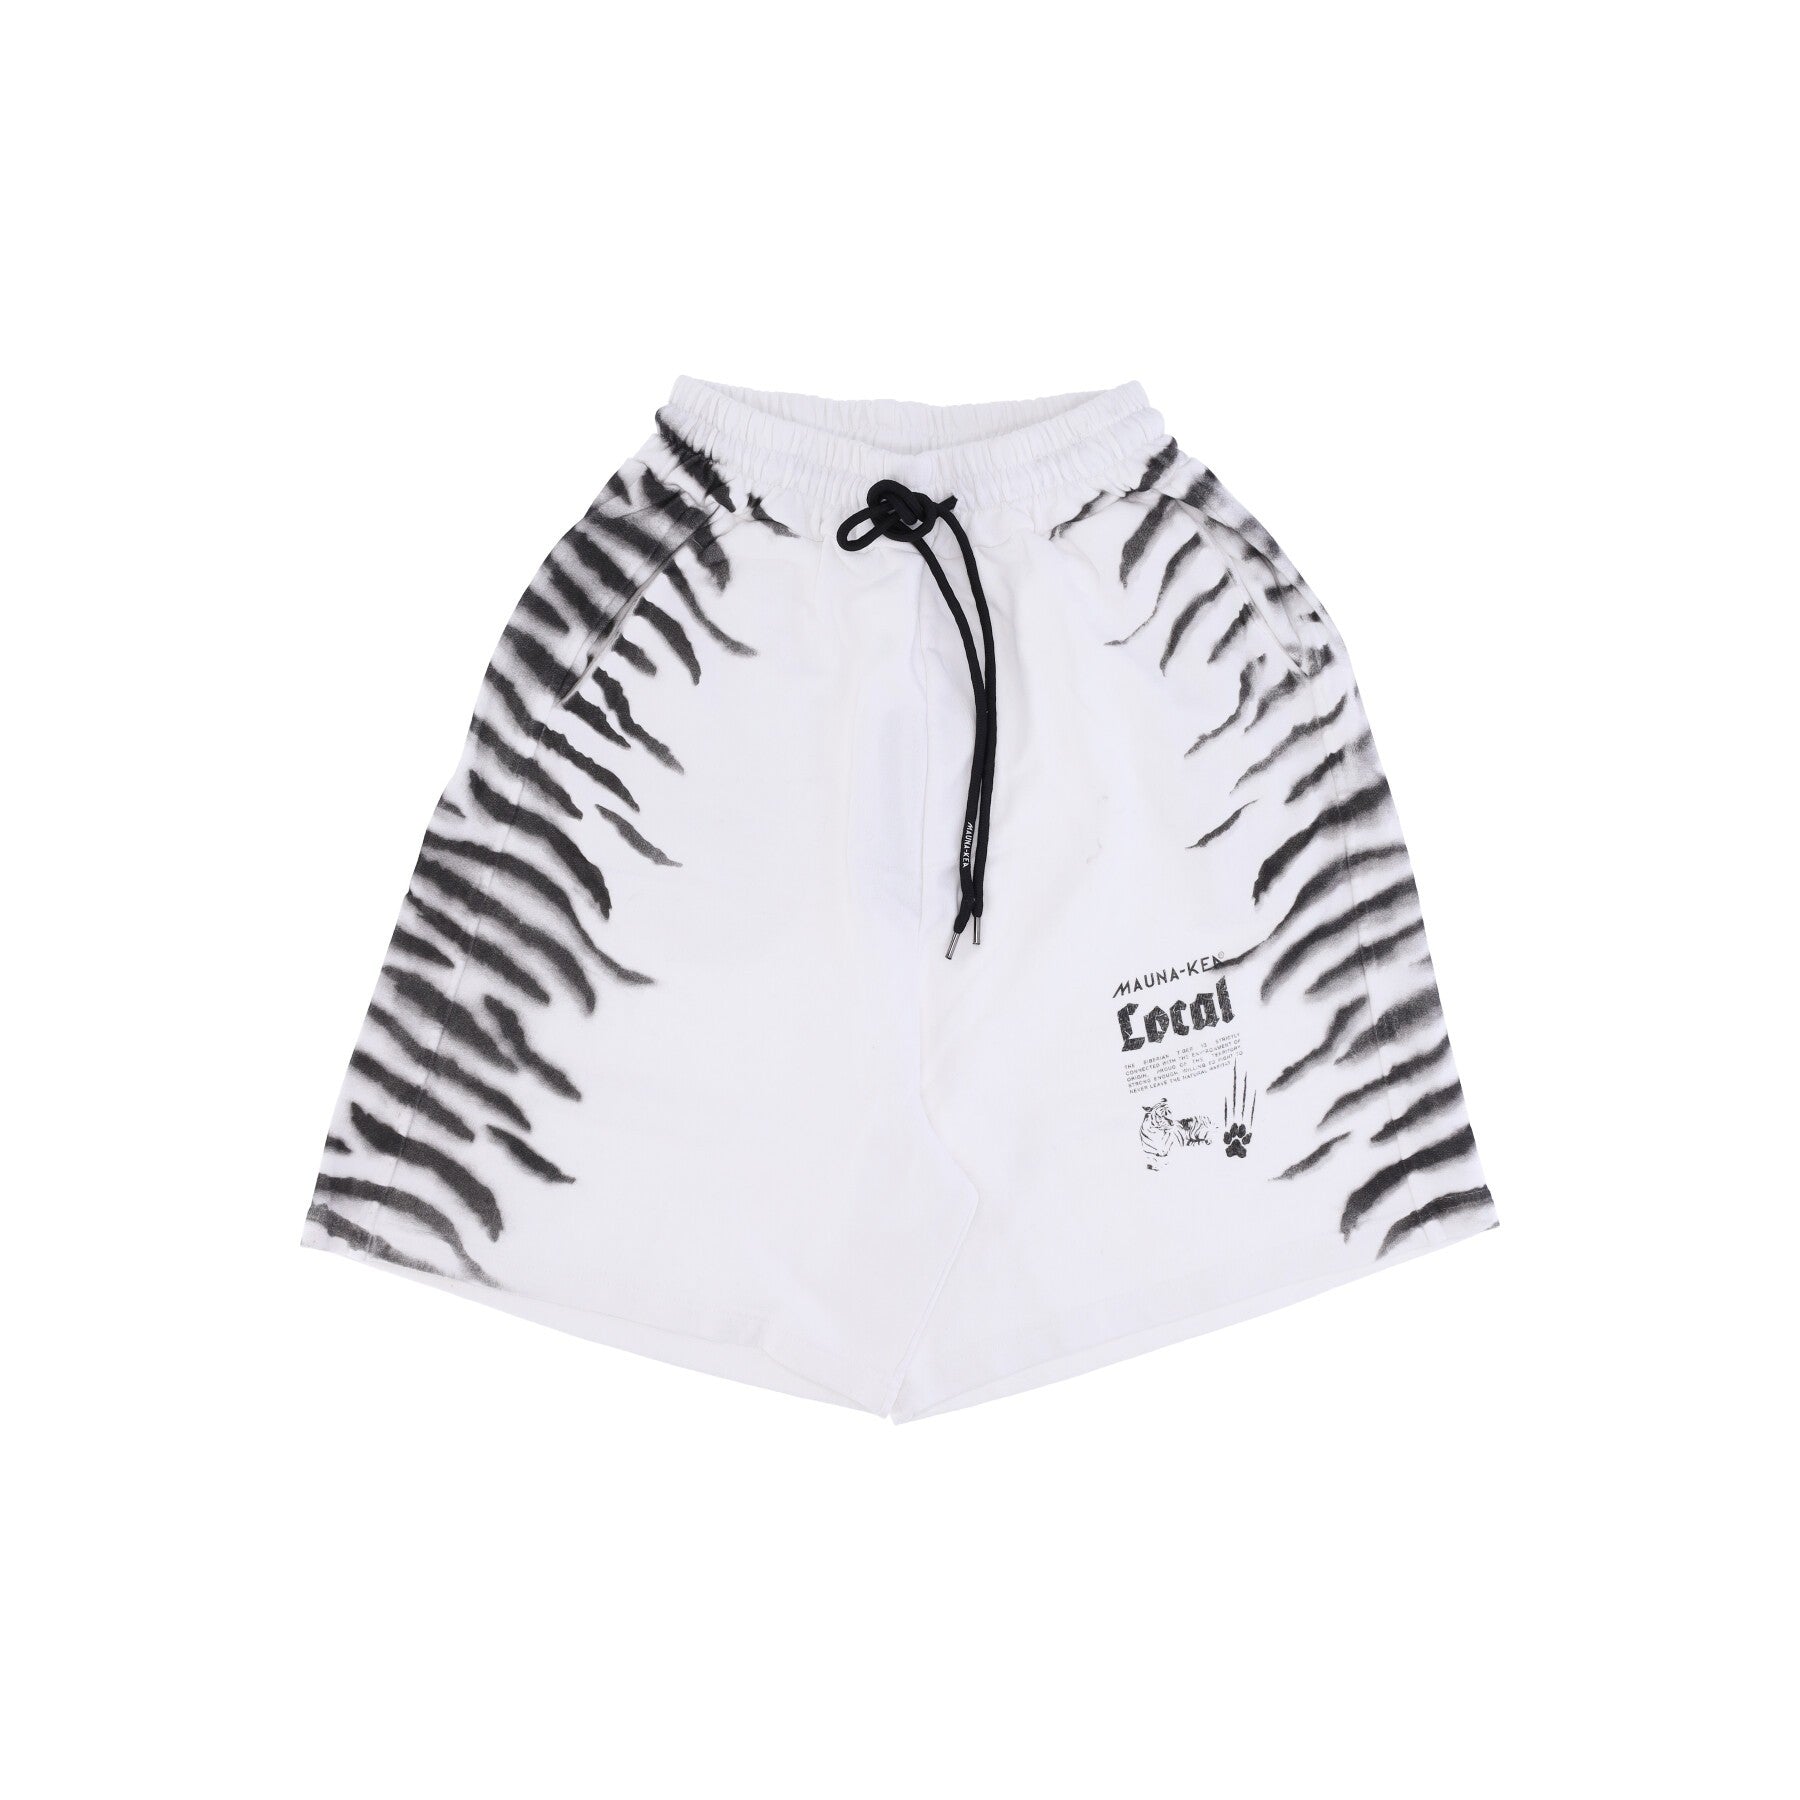 Short Men's Tracksuit Pants Tiger Basket Pants White